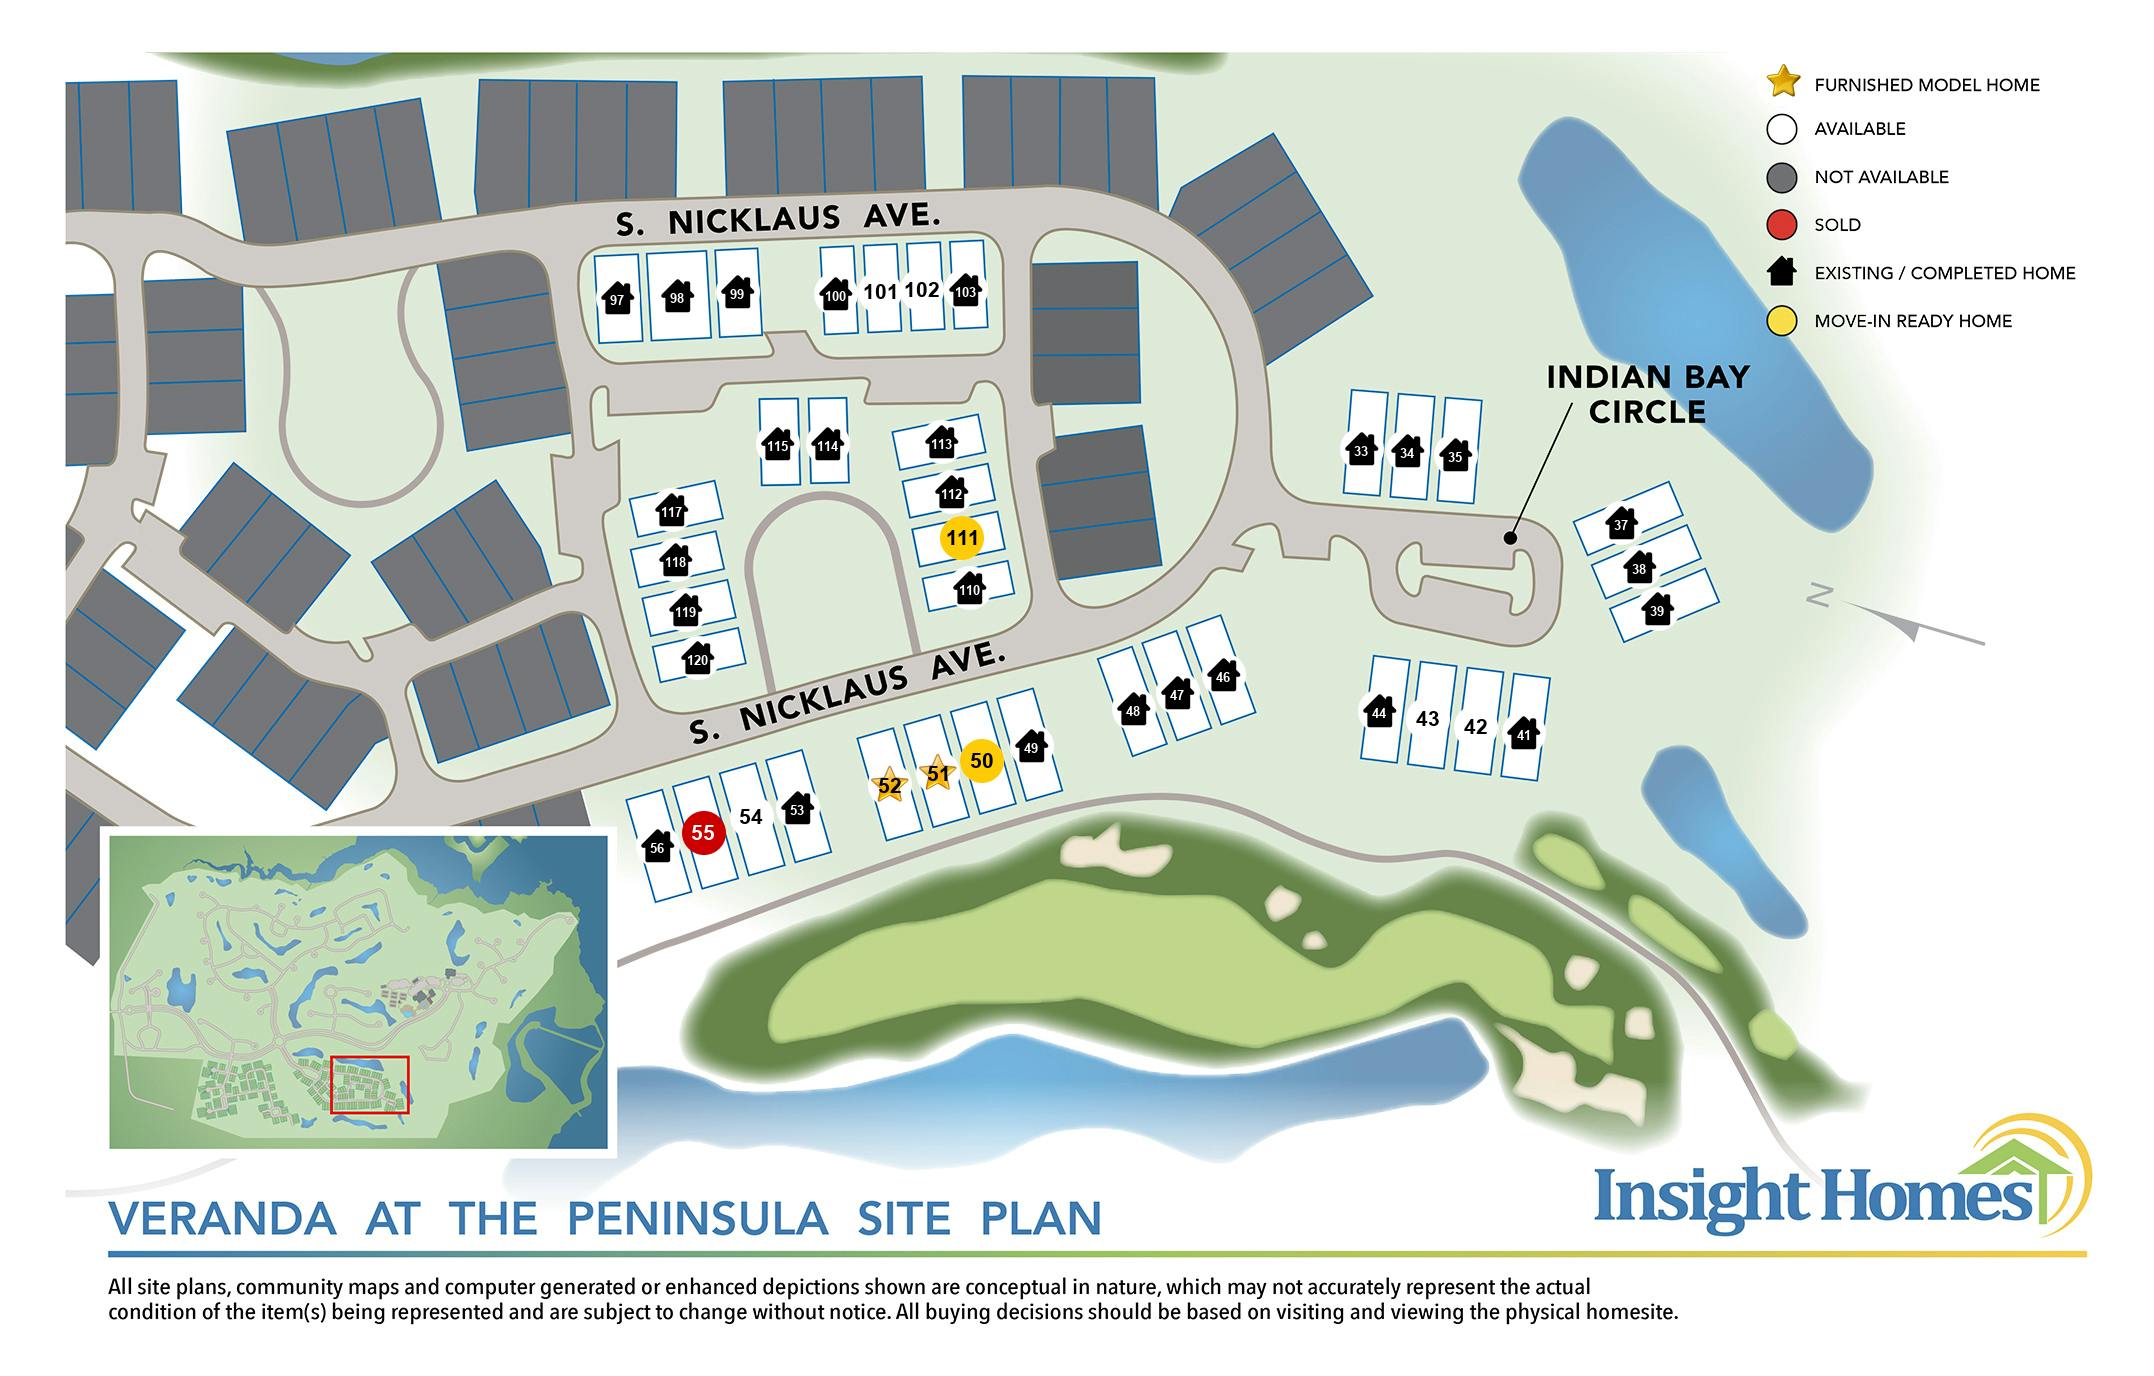 The Peninsula Siteplan